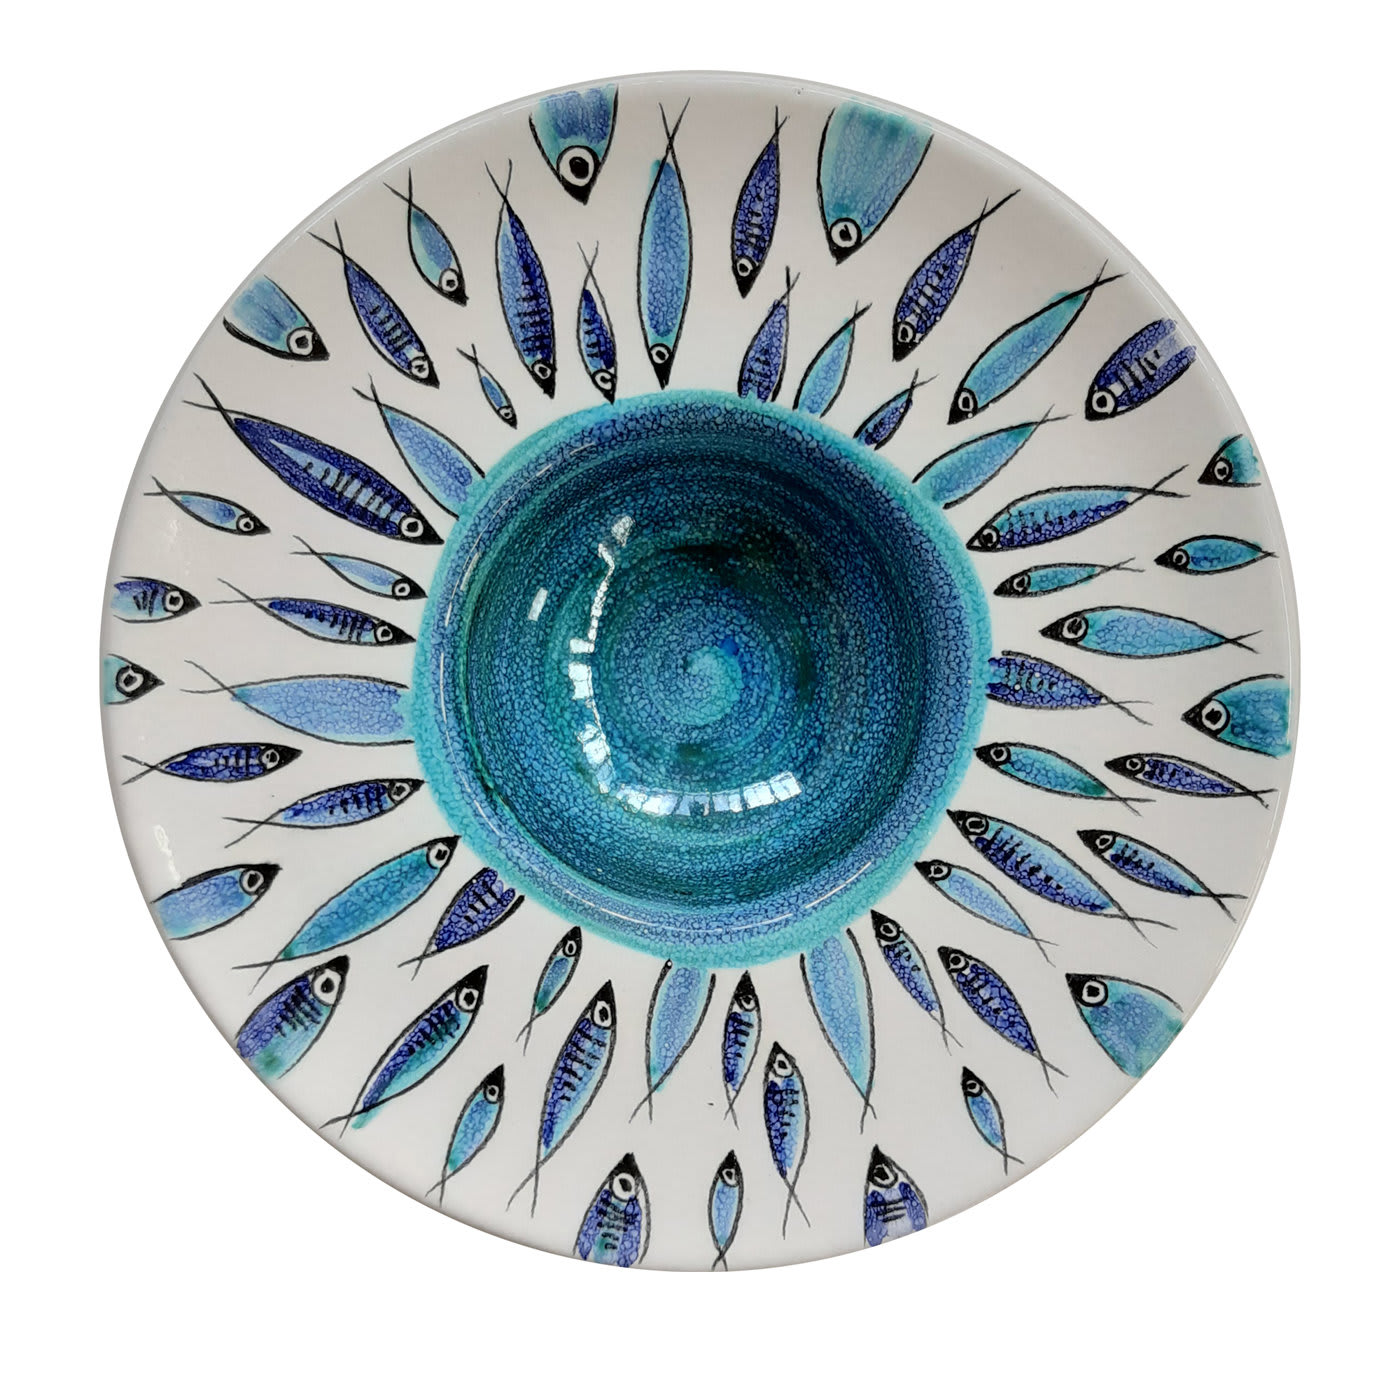 Tuffo Centerpiece Plate #1 - ICS Ceramics